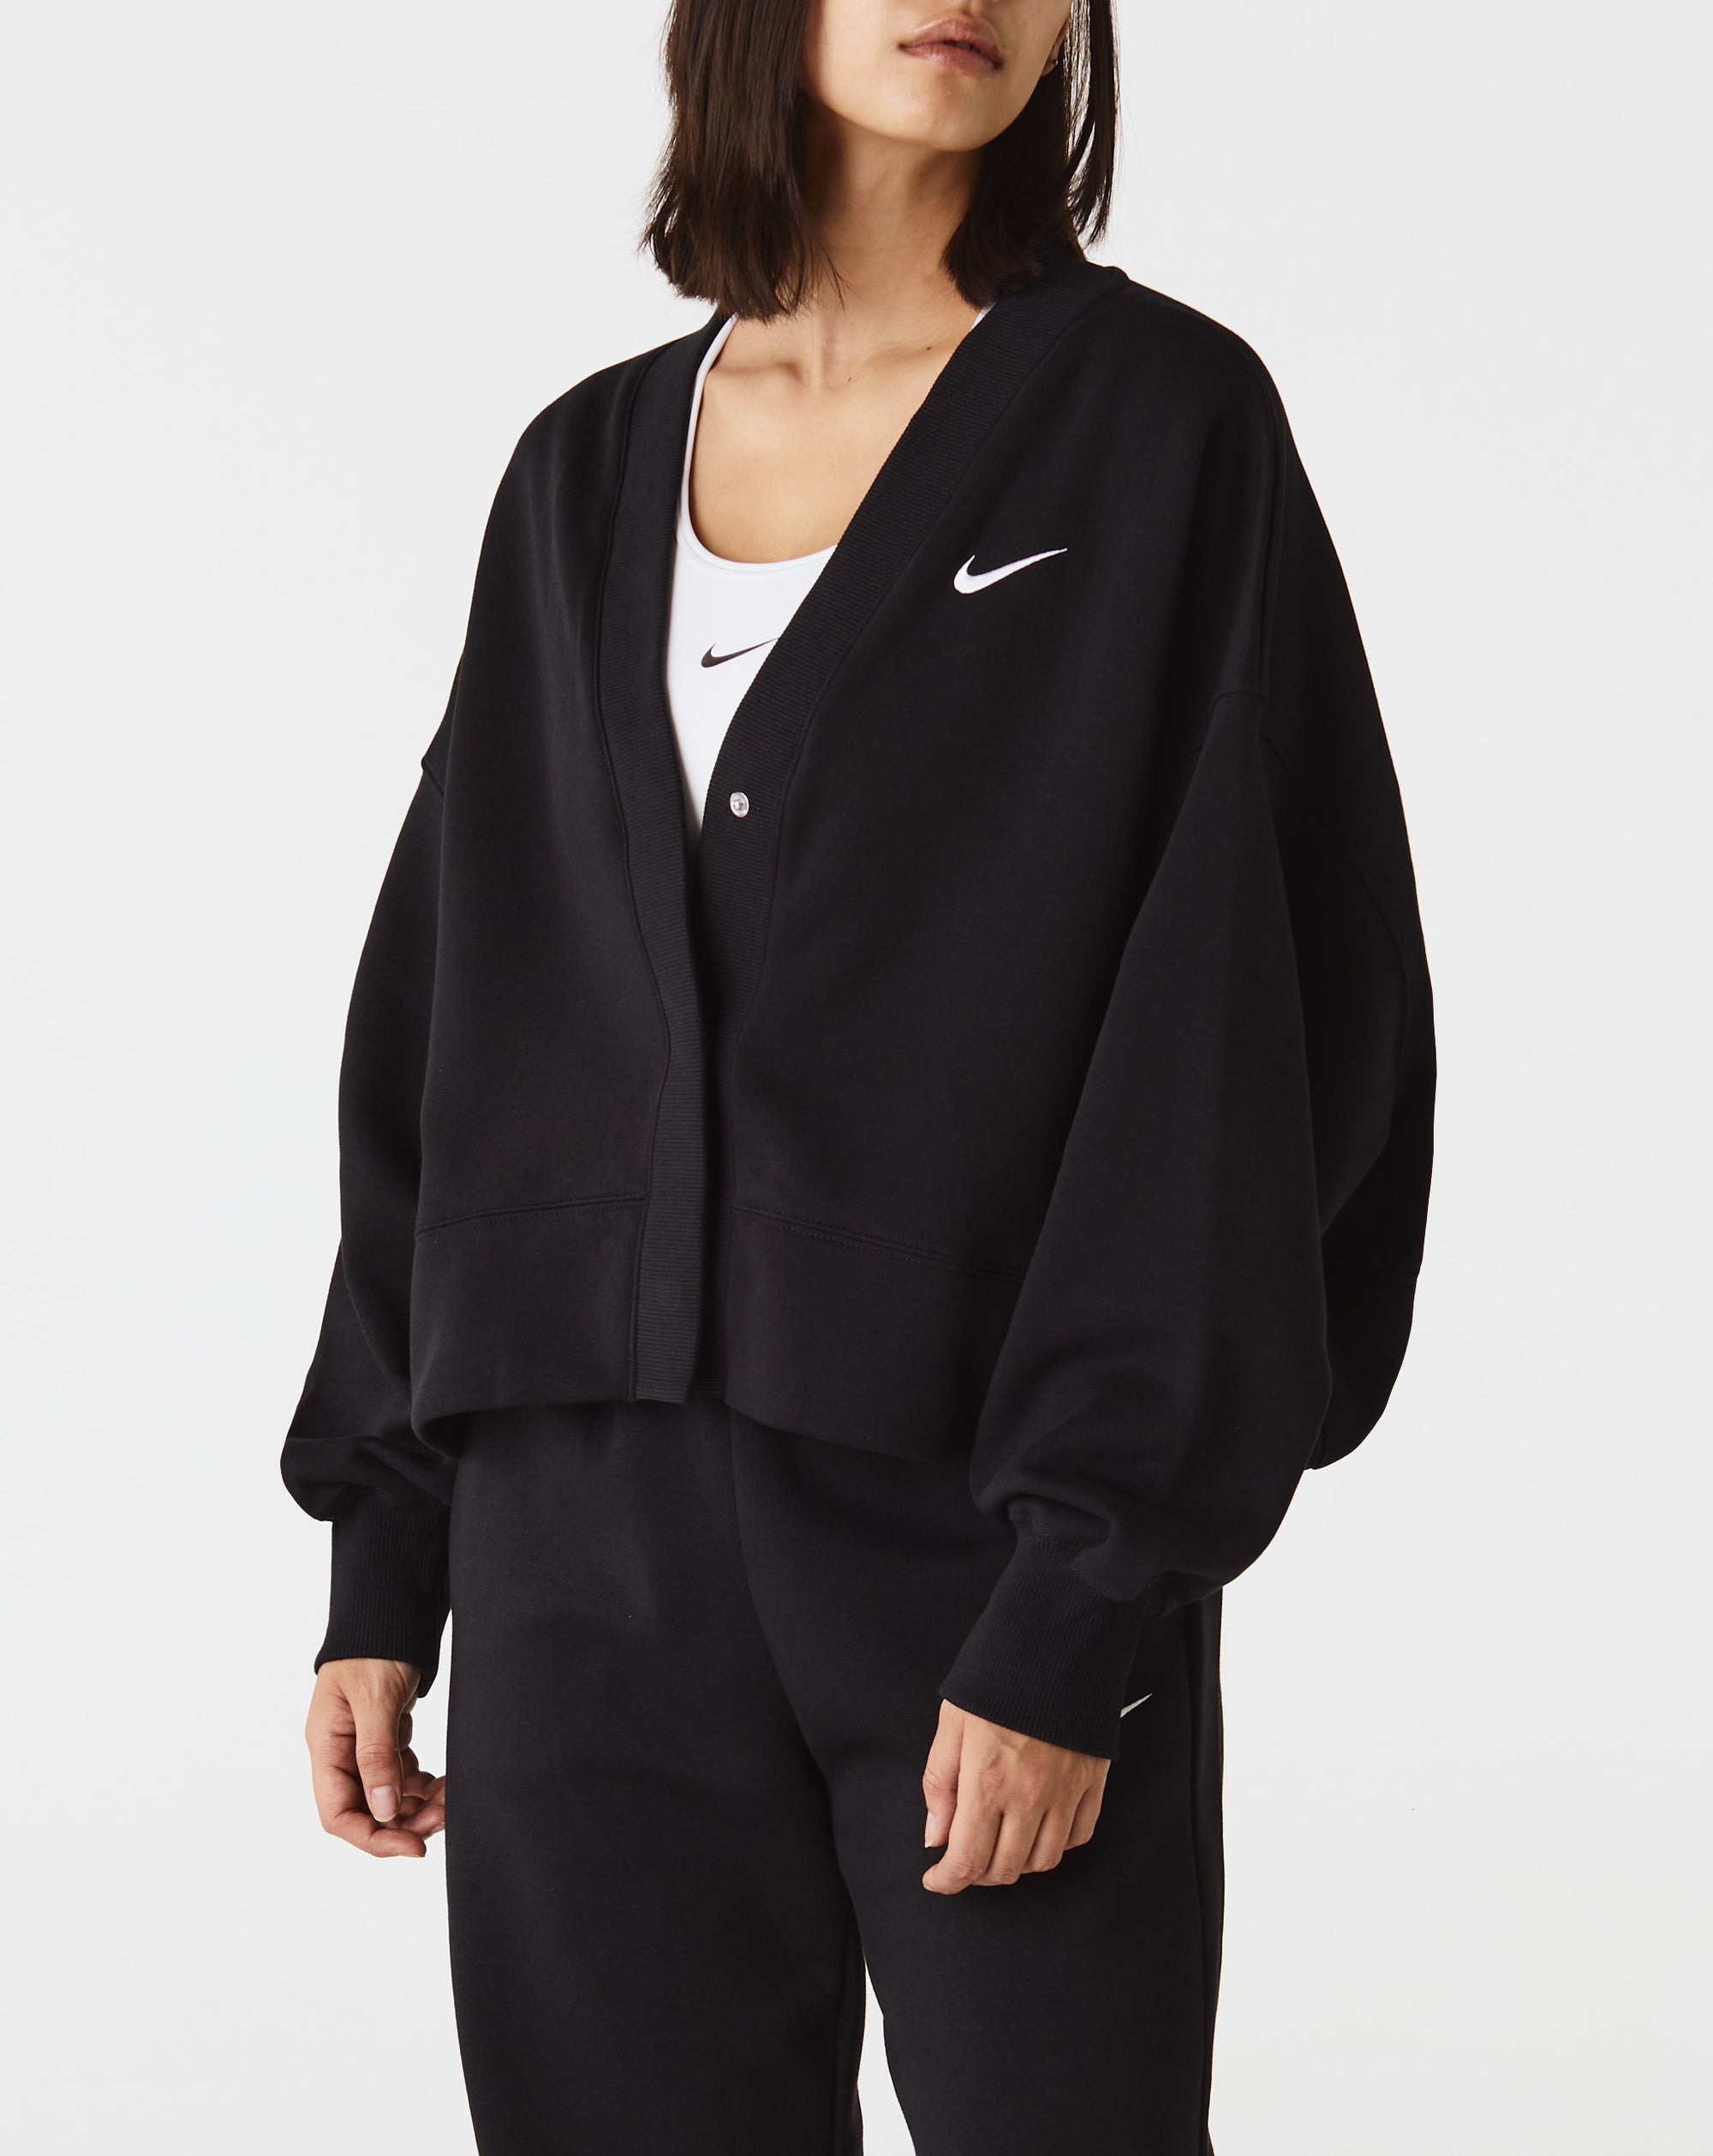 Nike Women's Phoenix Fleece Over-Oversized Cardigan - Rule of Next Apparel